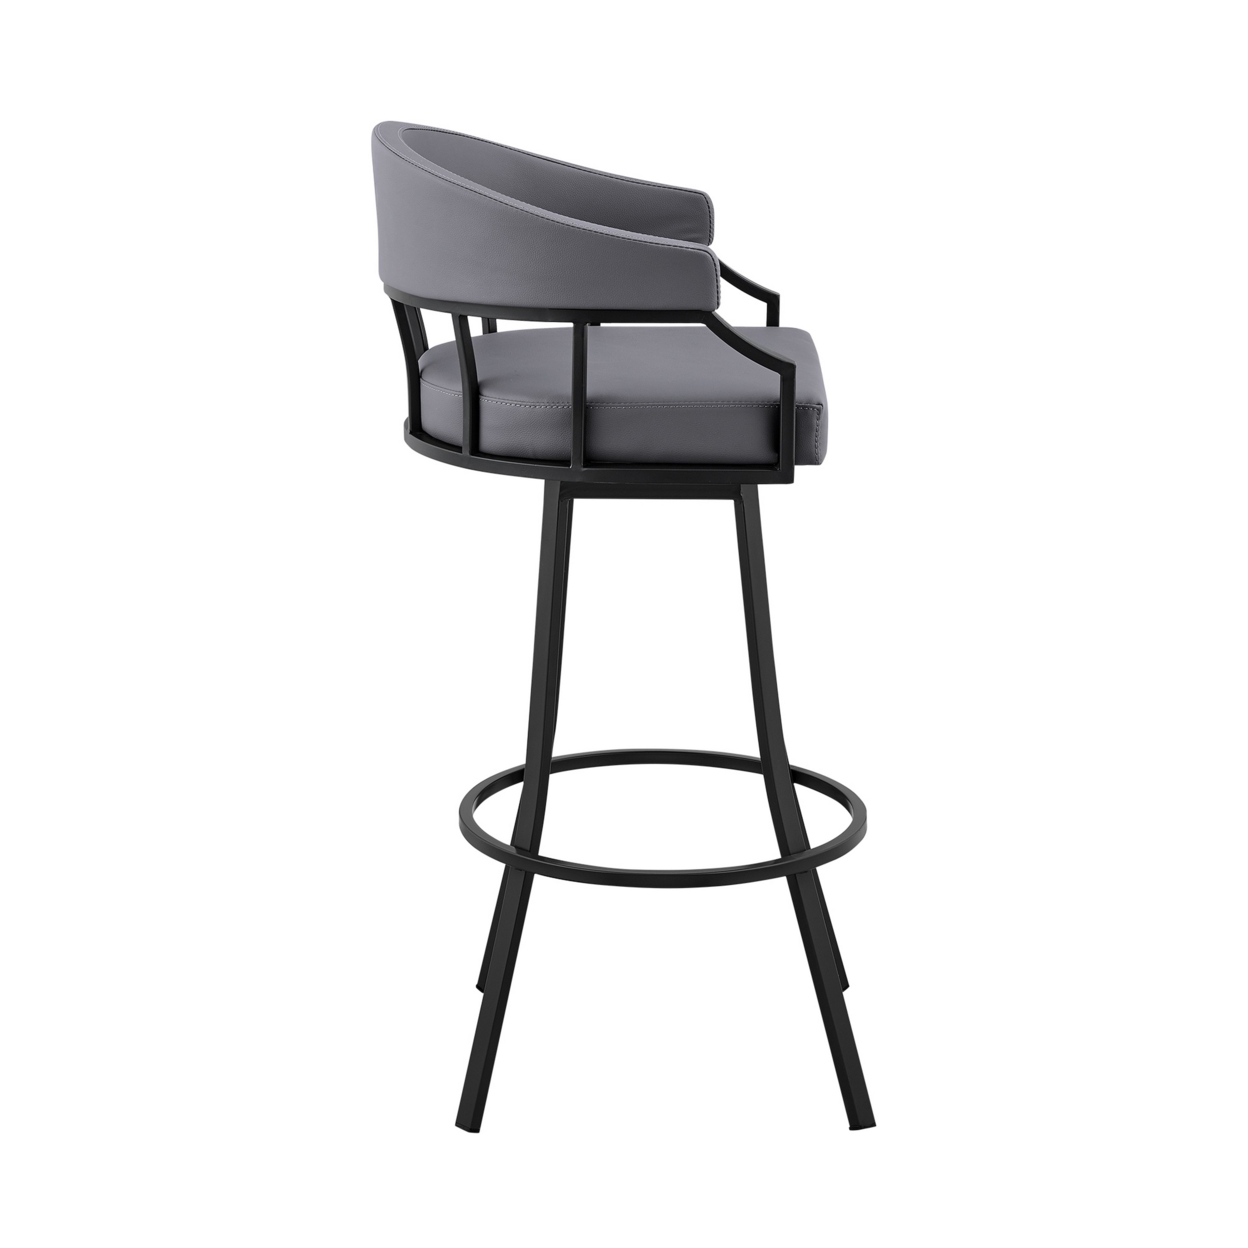 Cade 30 Inch Bar Stool, Swivel Chair, Faux Leather Cushion, Gray, Black- Saltoro Sherpi